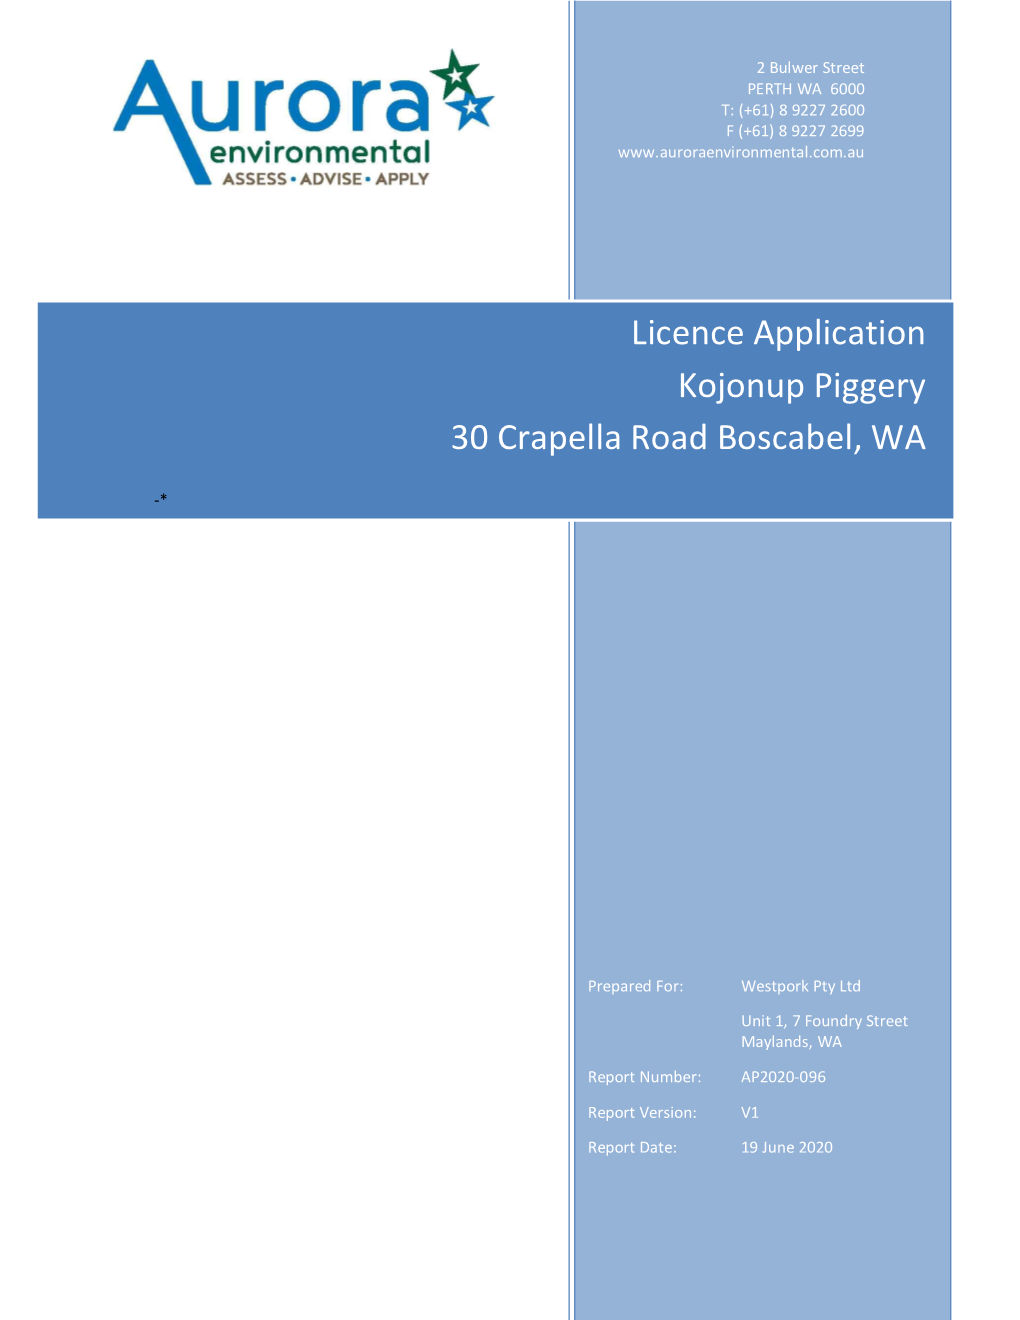 Licence Application Kojonup Piggery 30 Crapella Road Boscabel, WA